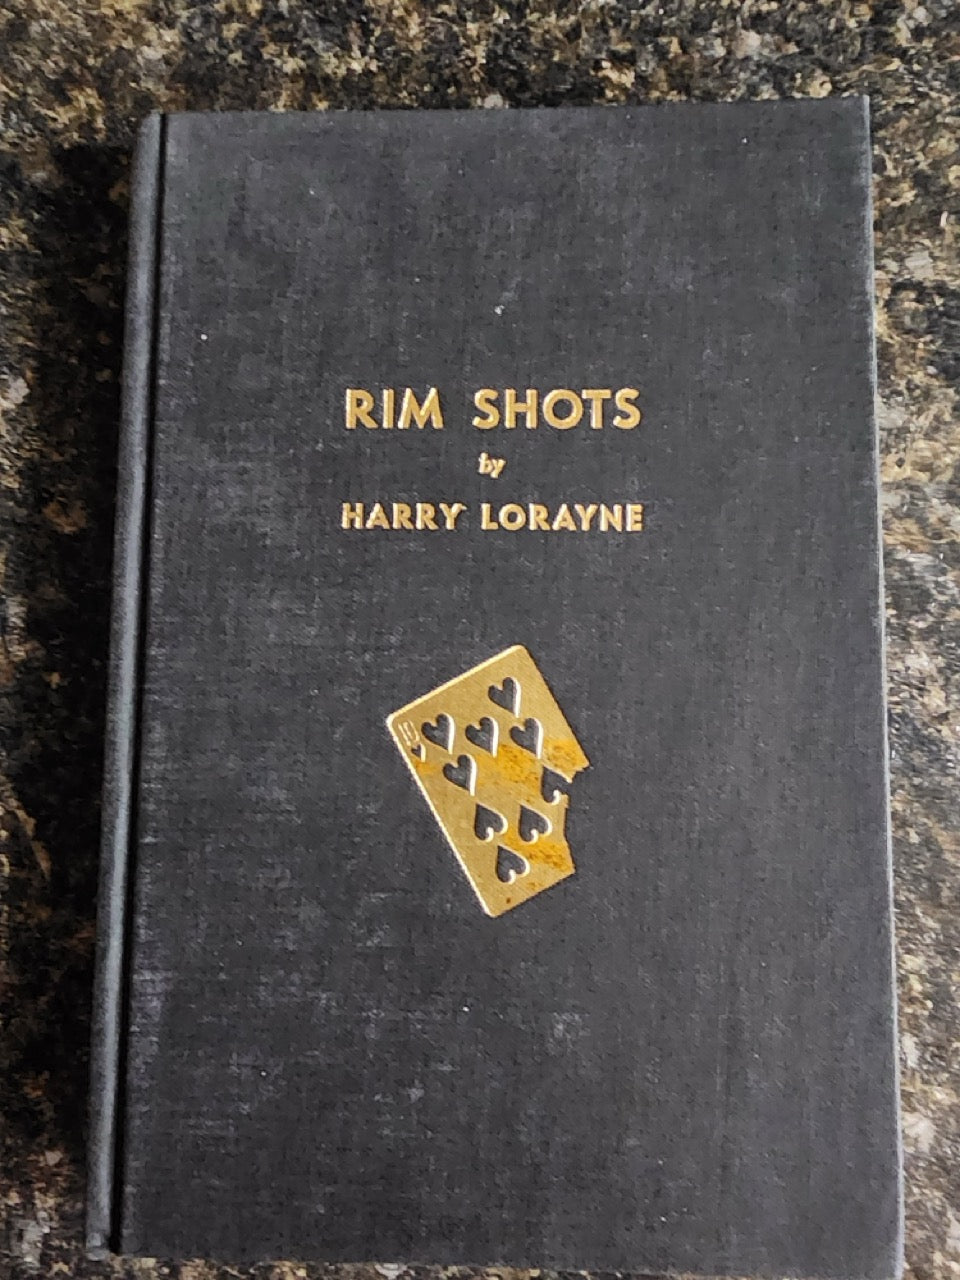 Rim Shots - Harry Lorayne (damaged copy)